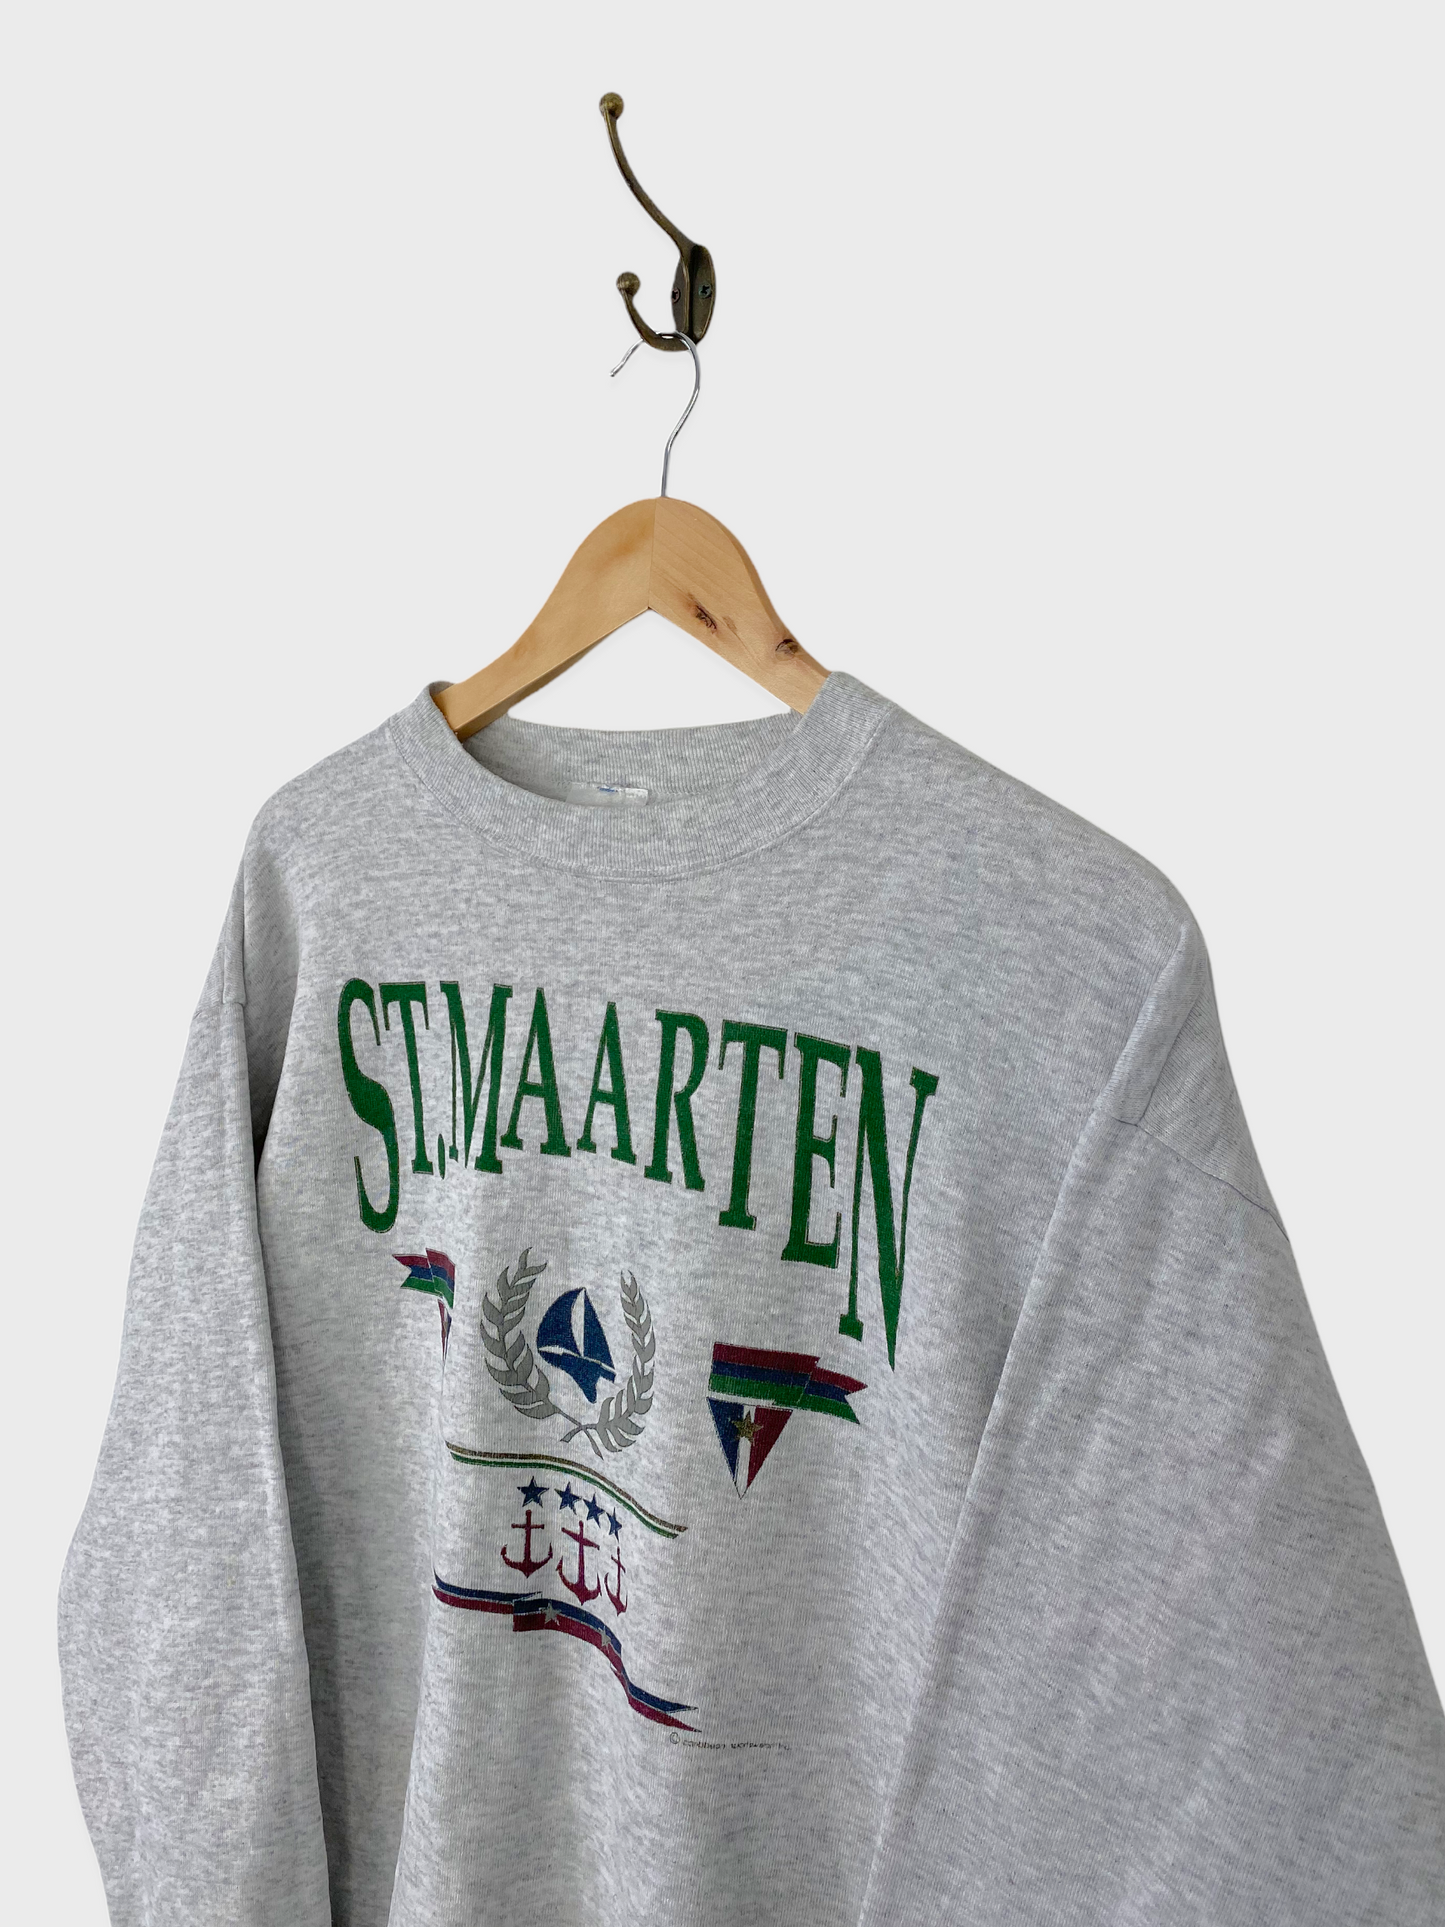 90's St. Maarten USA Made Vintage Sweatshirt Size 10